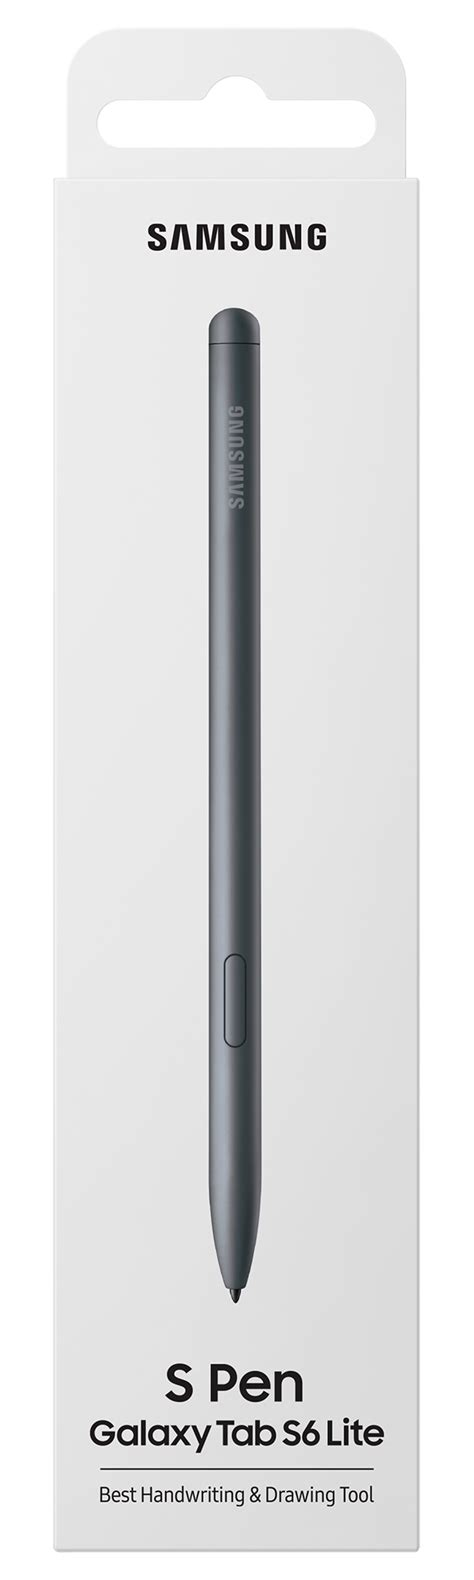 Samsung Electronics S Pen for Galaxy Tab S6 logo